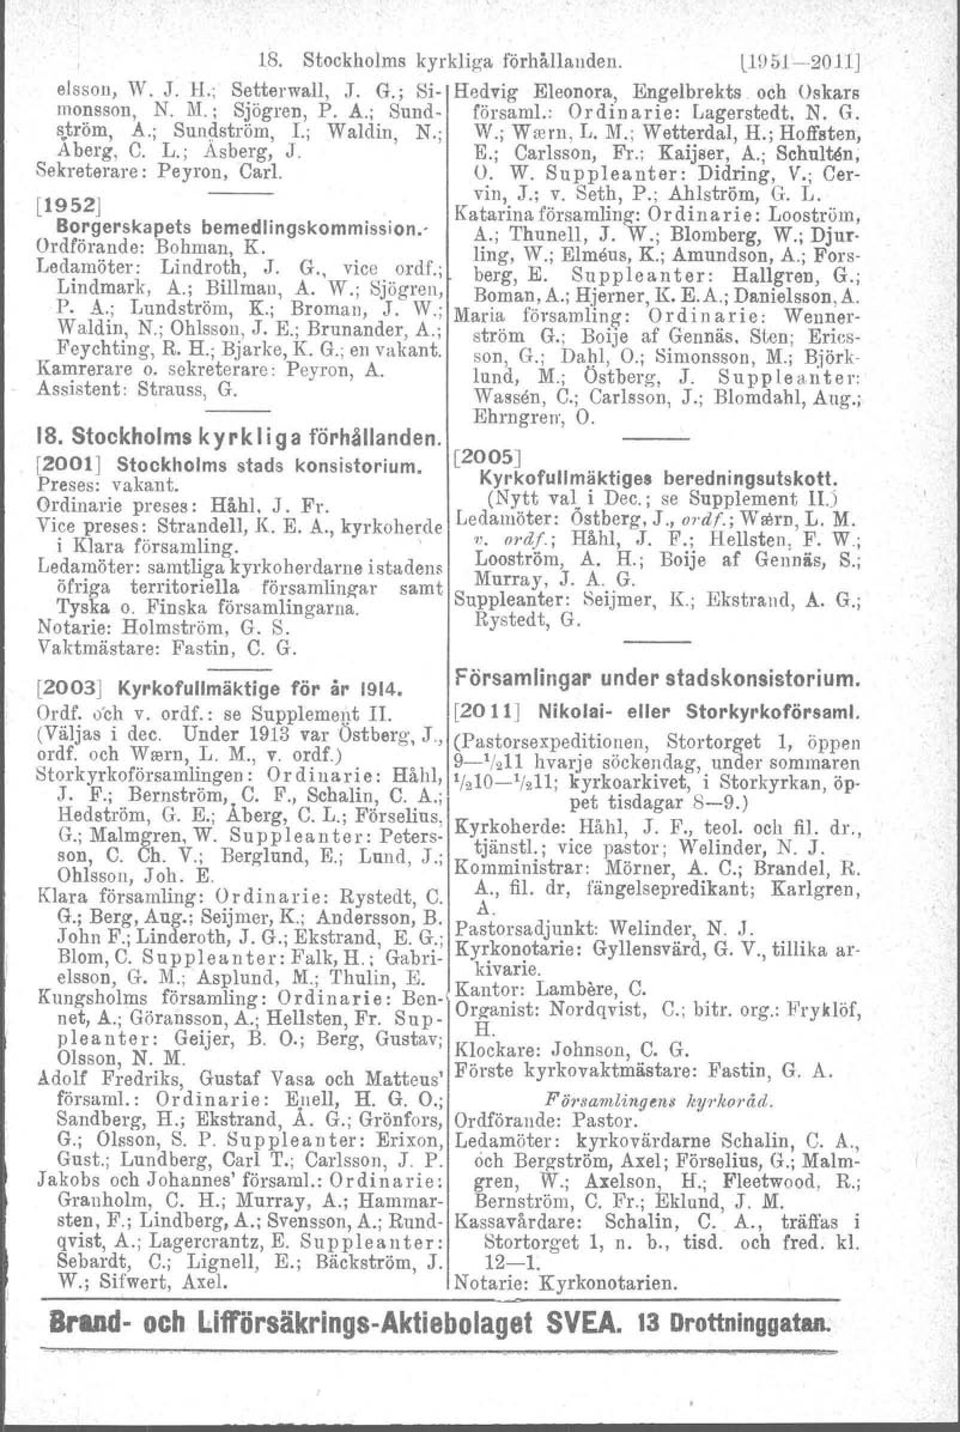 ; Schnlten, Sekreterare: Peyron, Carl. O. W. Suppleanter: Didring, V.; Cervin, J.; v. Seth, P.; Ahlström, G. L. [1952J Katarina församling: Ordinarie: Looström, Borgerskapets bemedlingskommission.